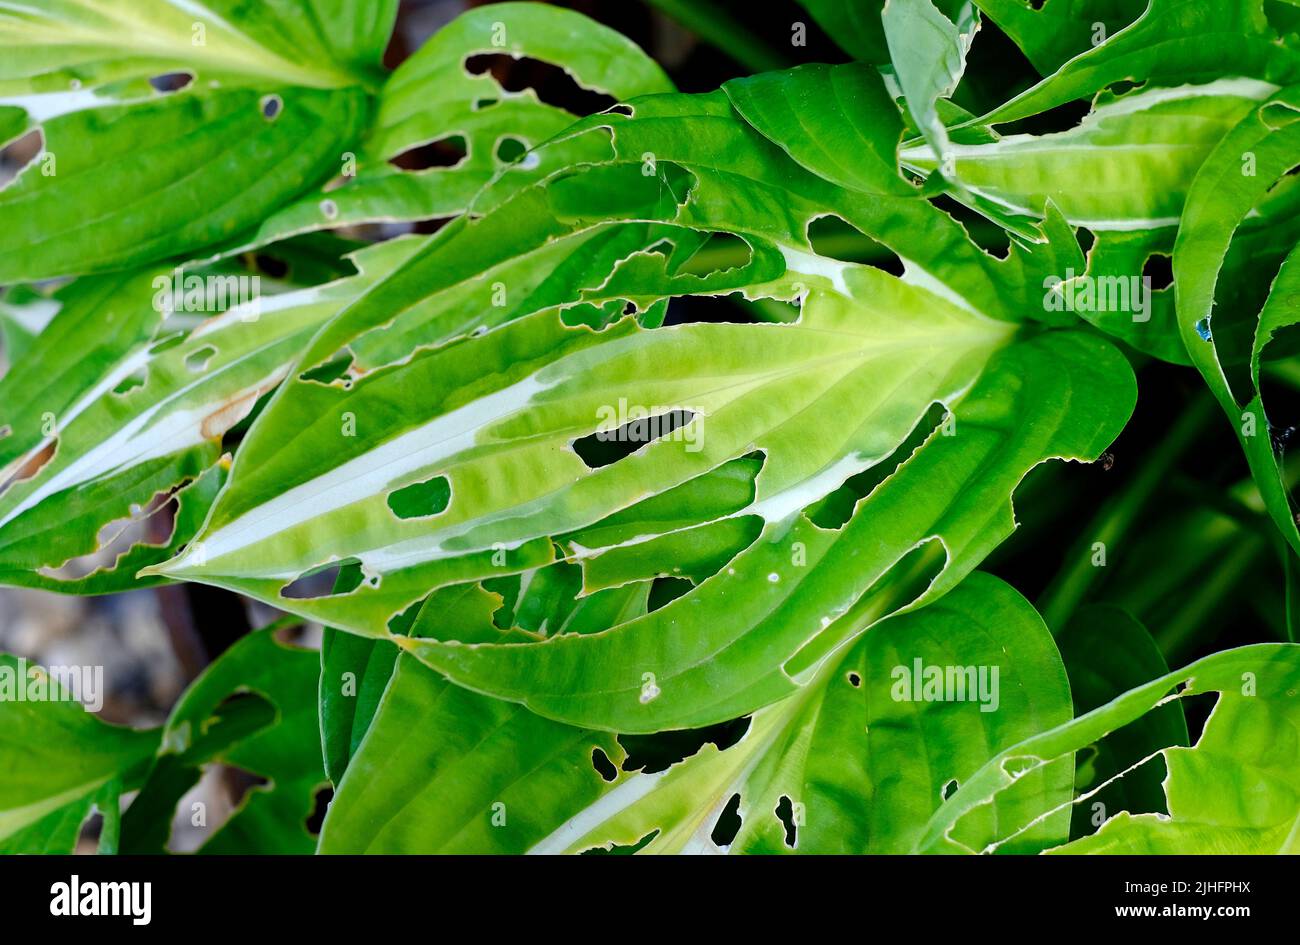 buchi in foglie di pianta hosta mangiato da lumache, norfolk, inghilterra Foto Stock